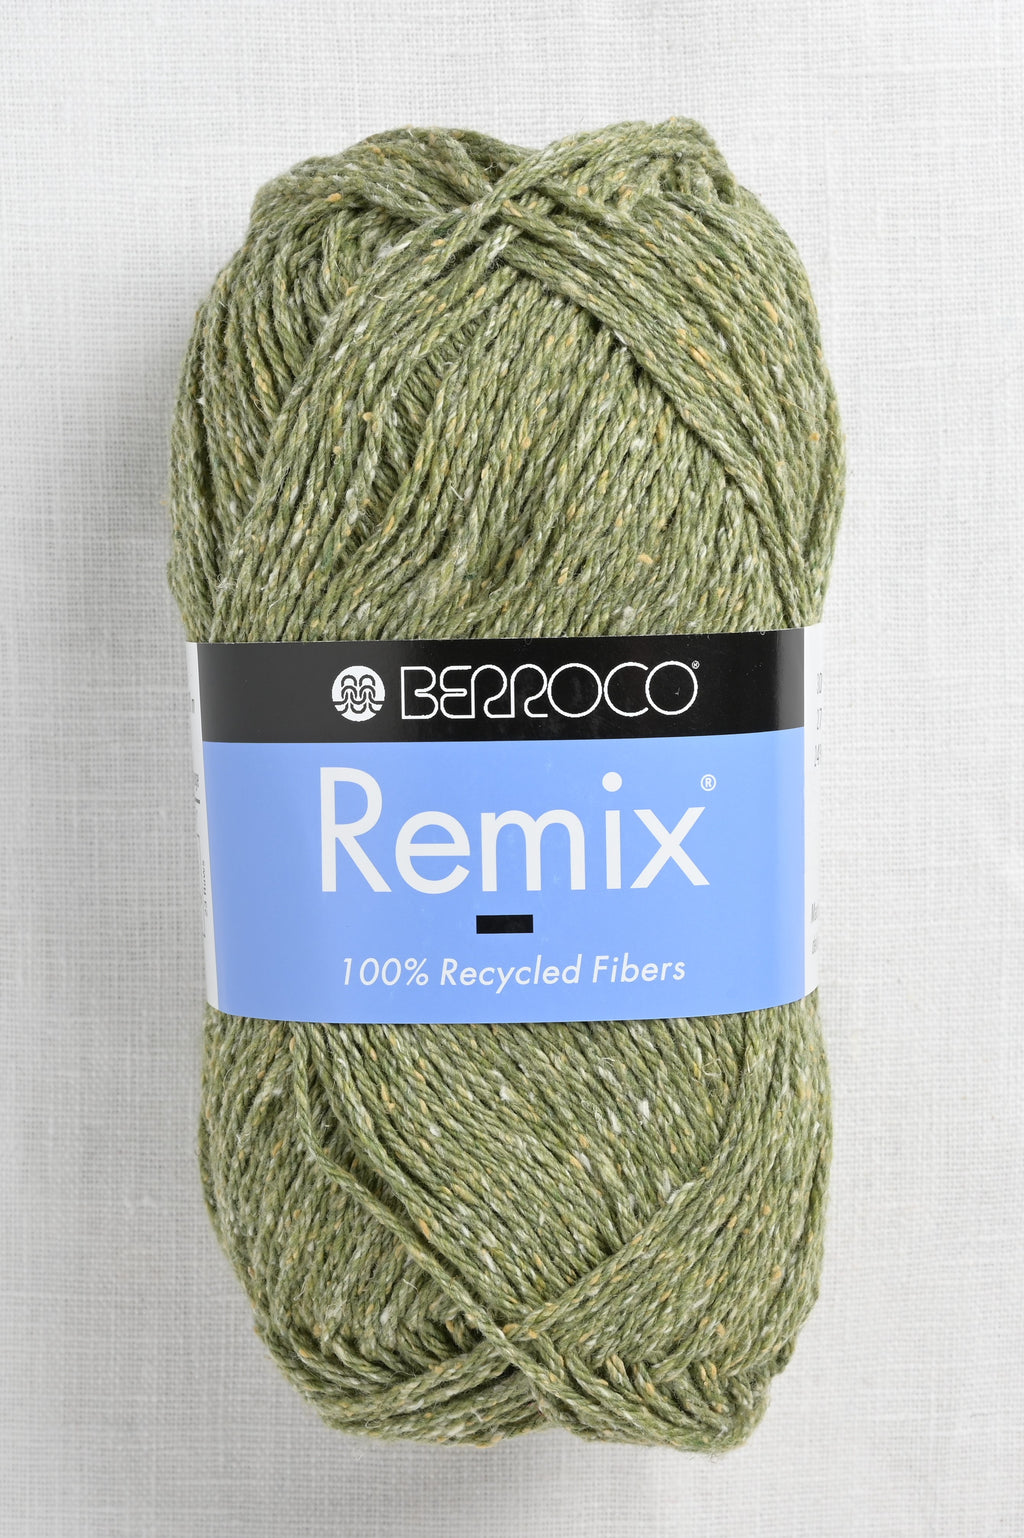 Berroco Remix 3921 Fern